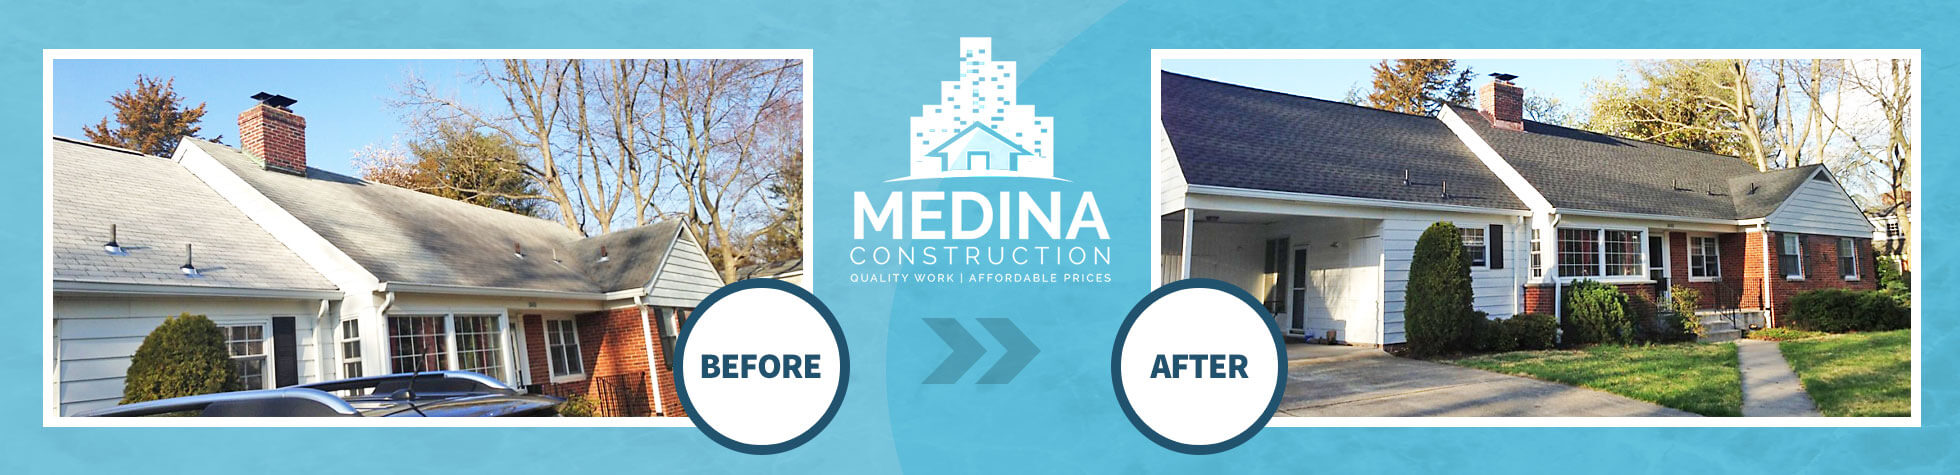 Medina Construction & Roofing